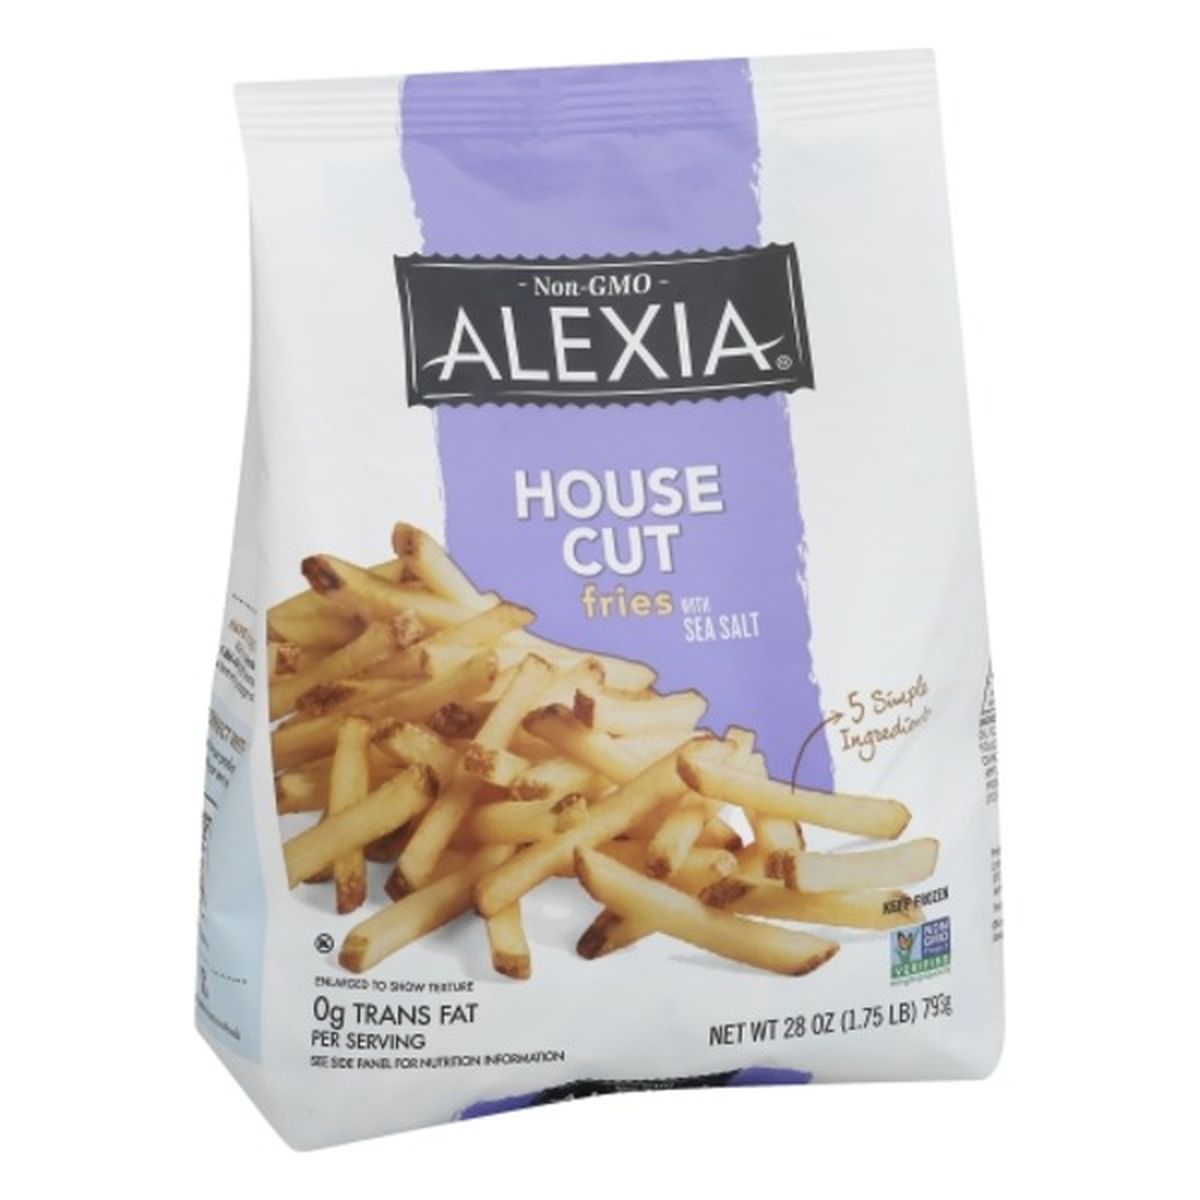 Calories in Alexia Fries, House Cut